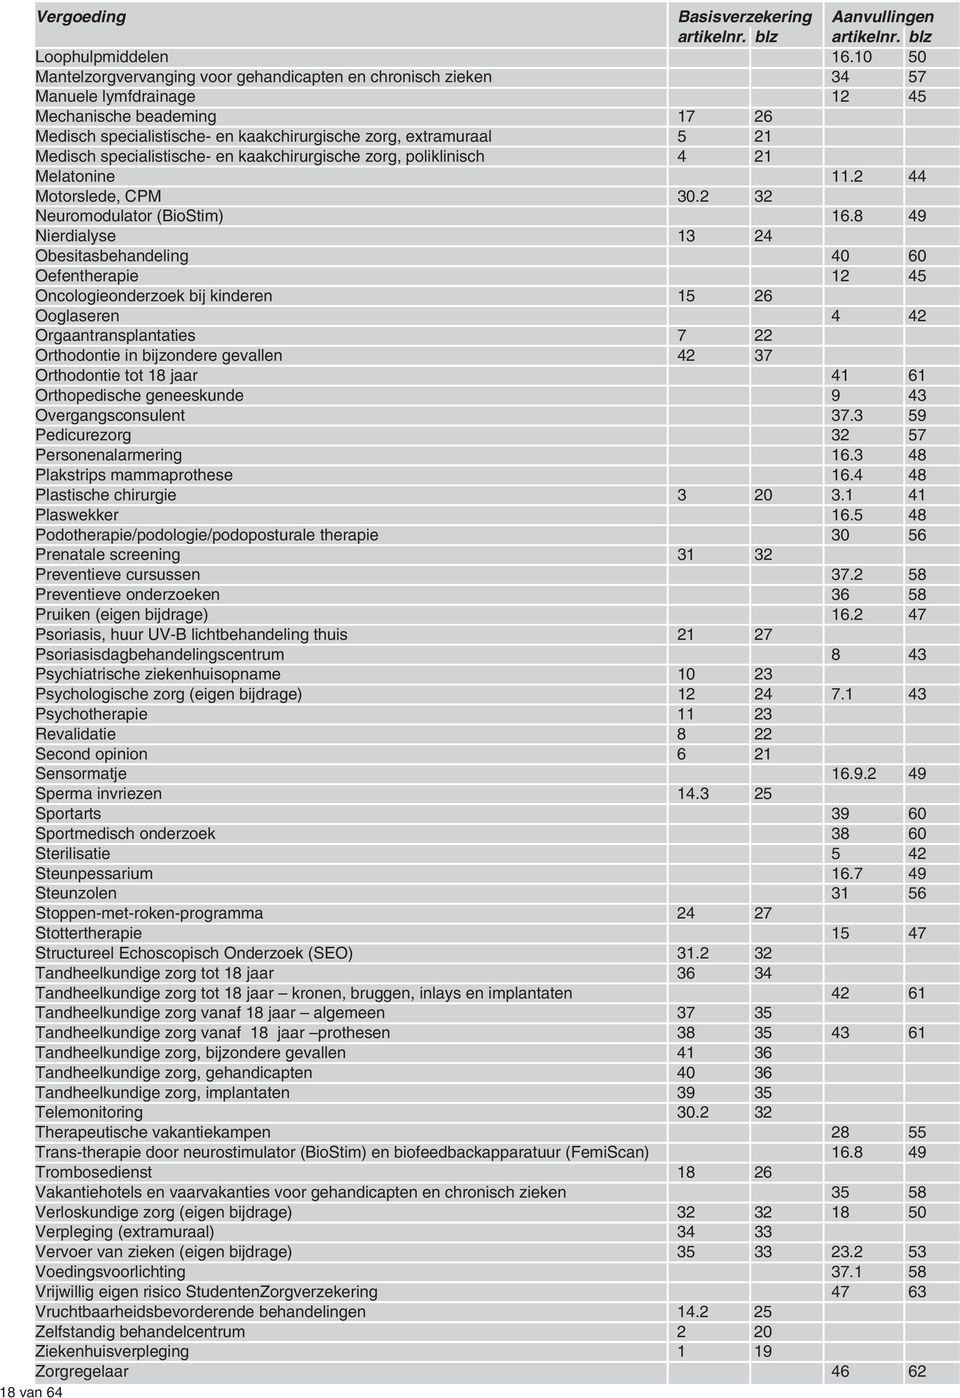 Medisch specialistische- en kaakchirurgische zorg, poliklinisch 4 21 Melatonine 11.2 44 Motorslede, CPM 30.2 32 Neuromodulator (BioStim) 16.